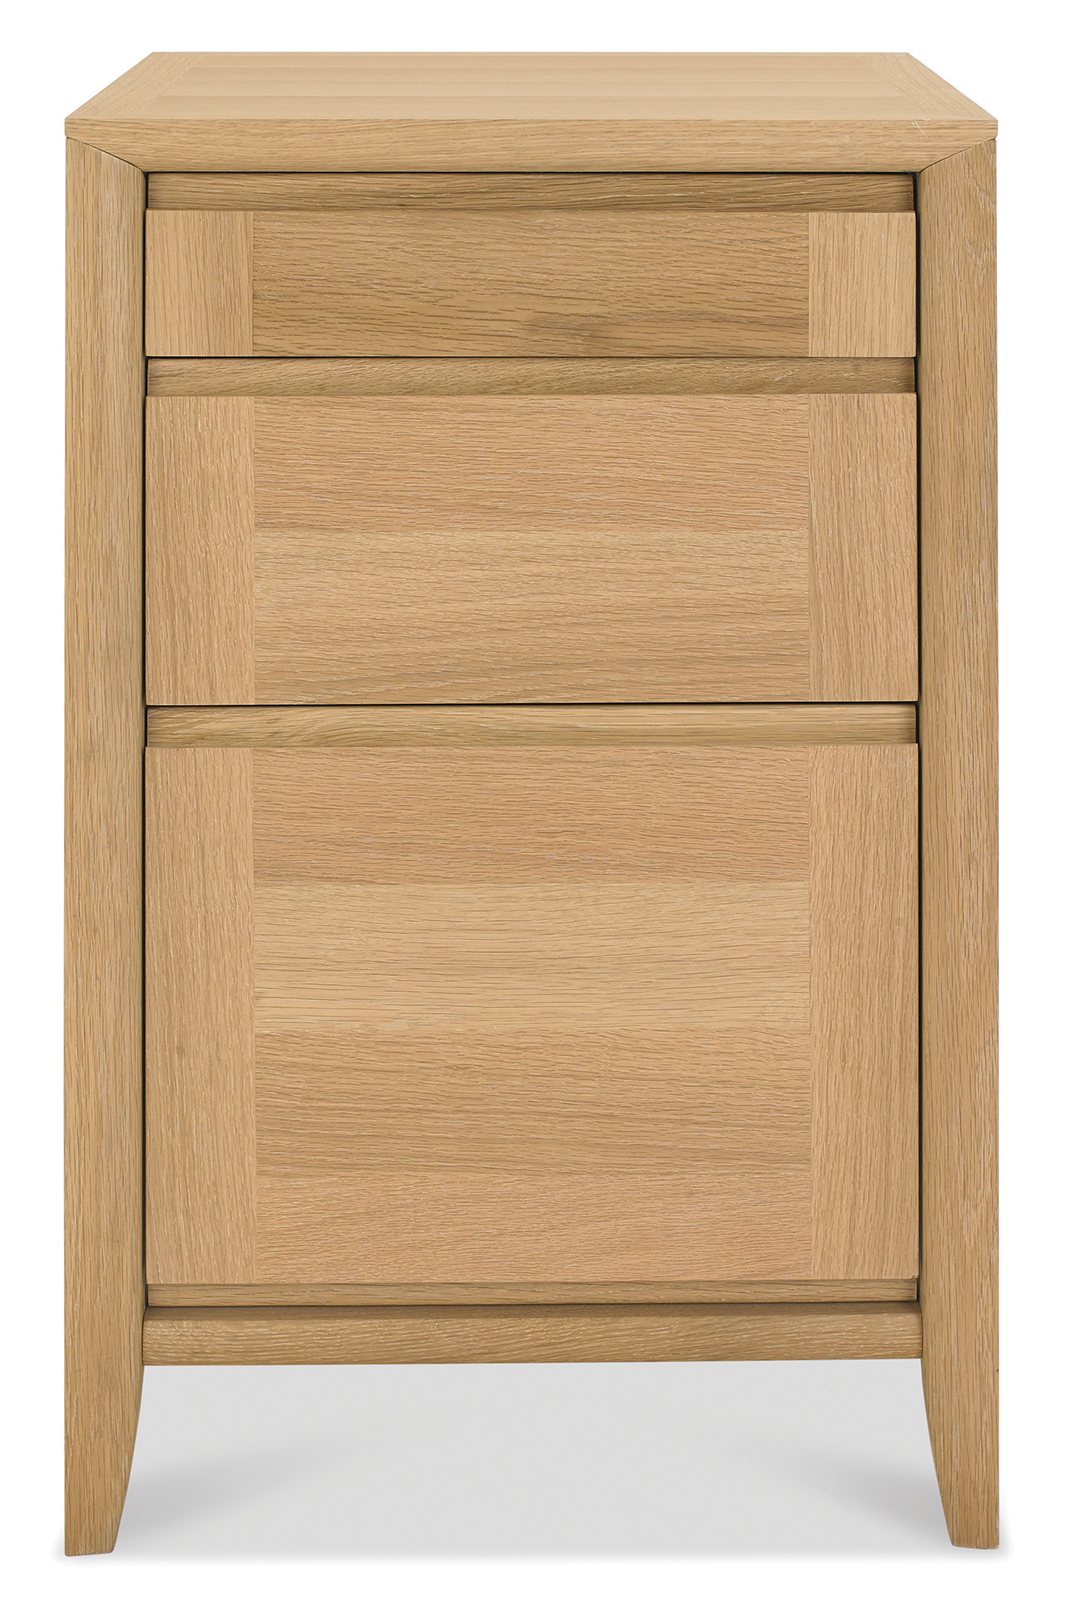 Bergen Oak Filing Cabinet | Home Office Furniture - Bentley Designs UK Ltd